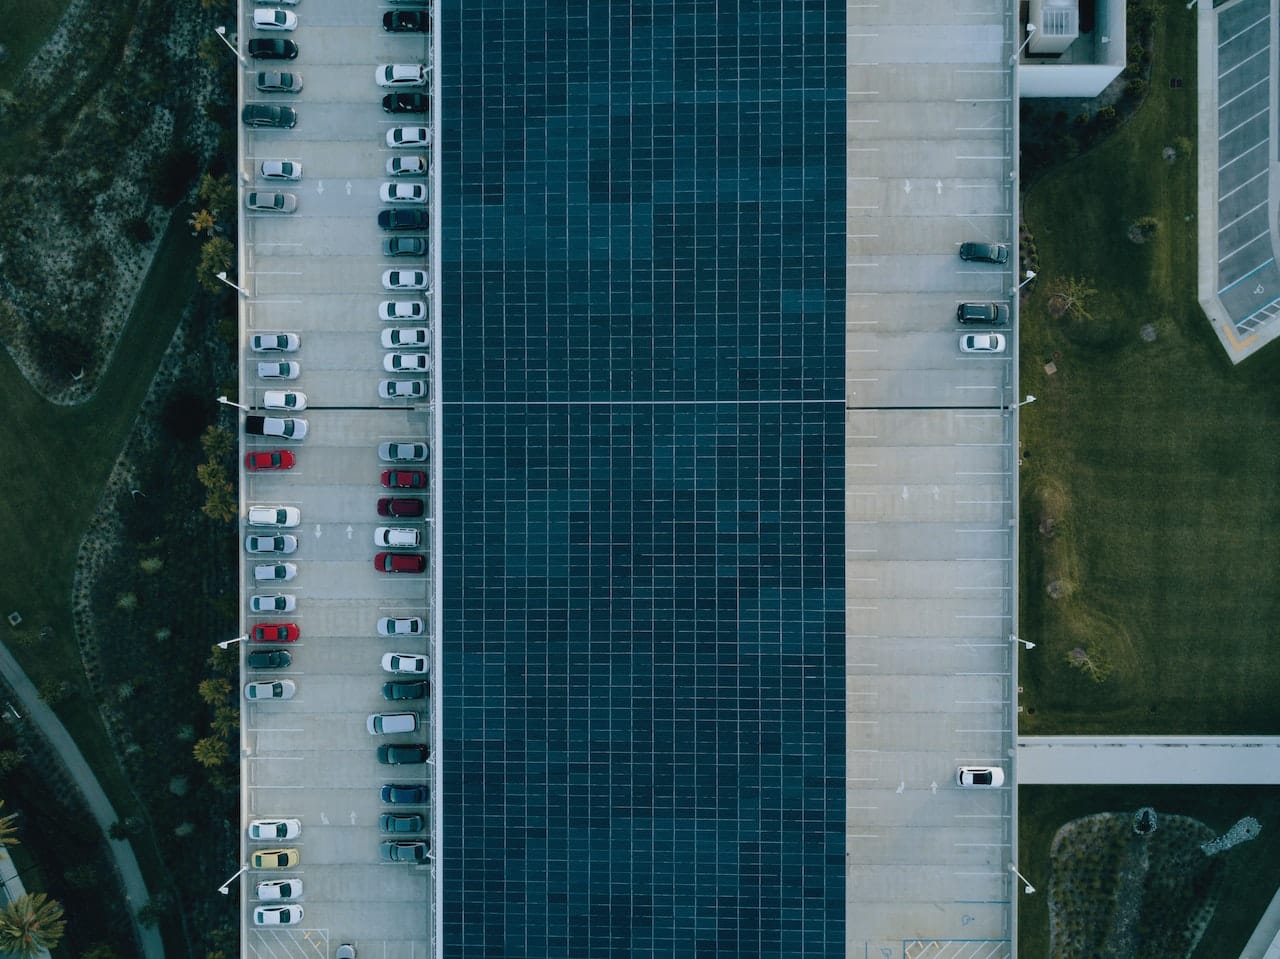 bird's eye view of parking lot